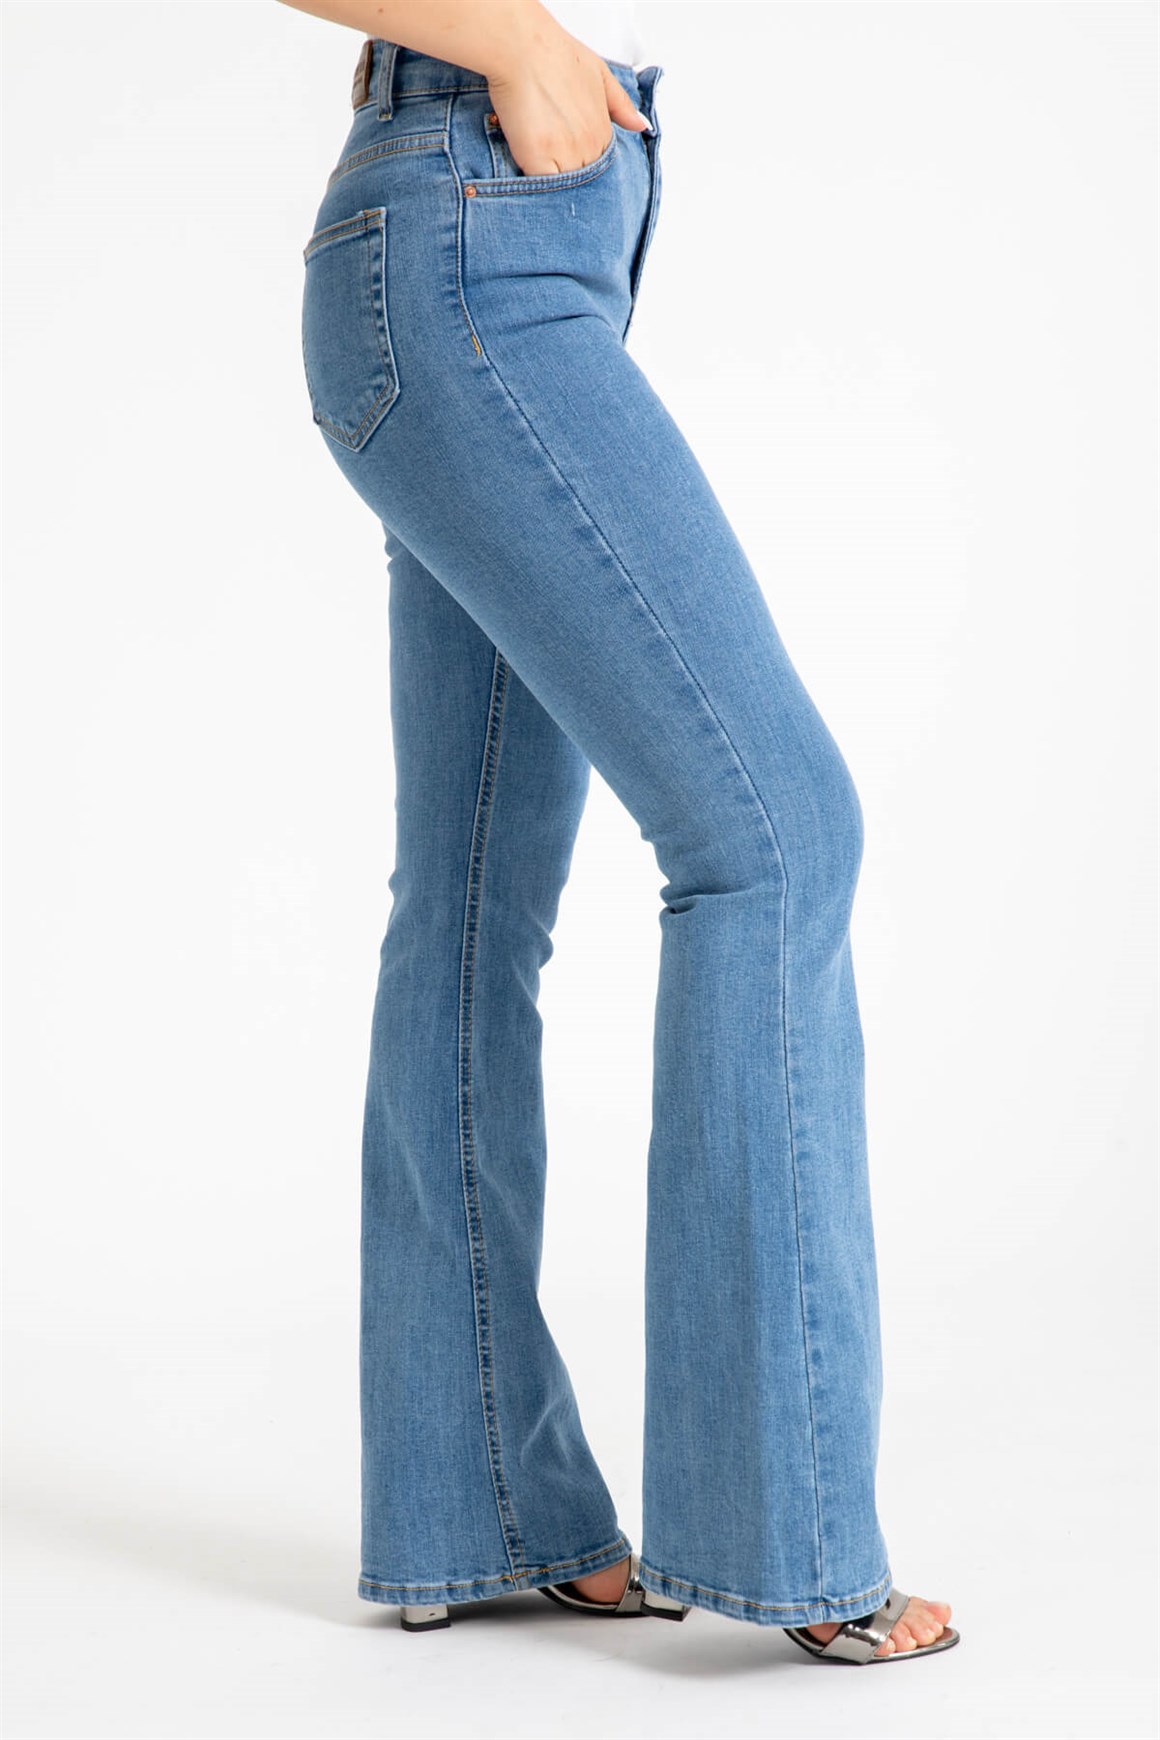 Spanish Cut Women's Jeans - Blue